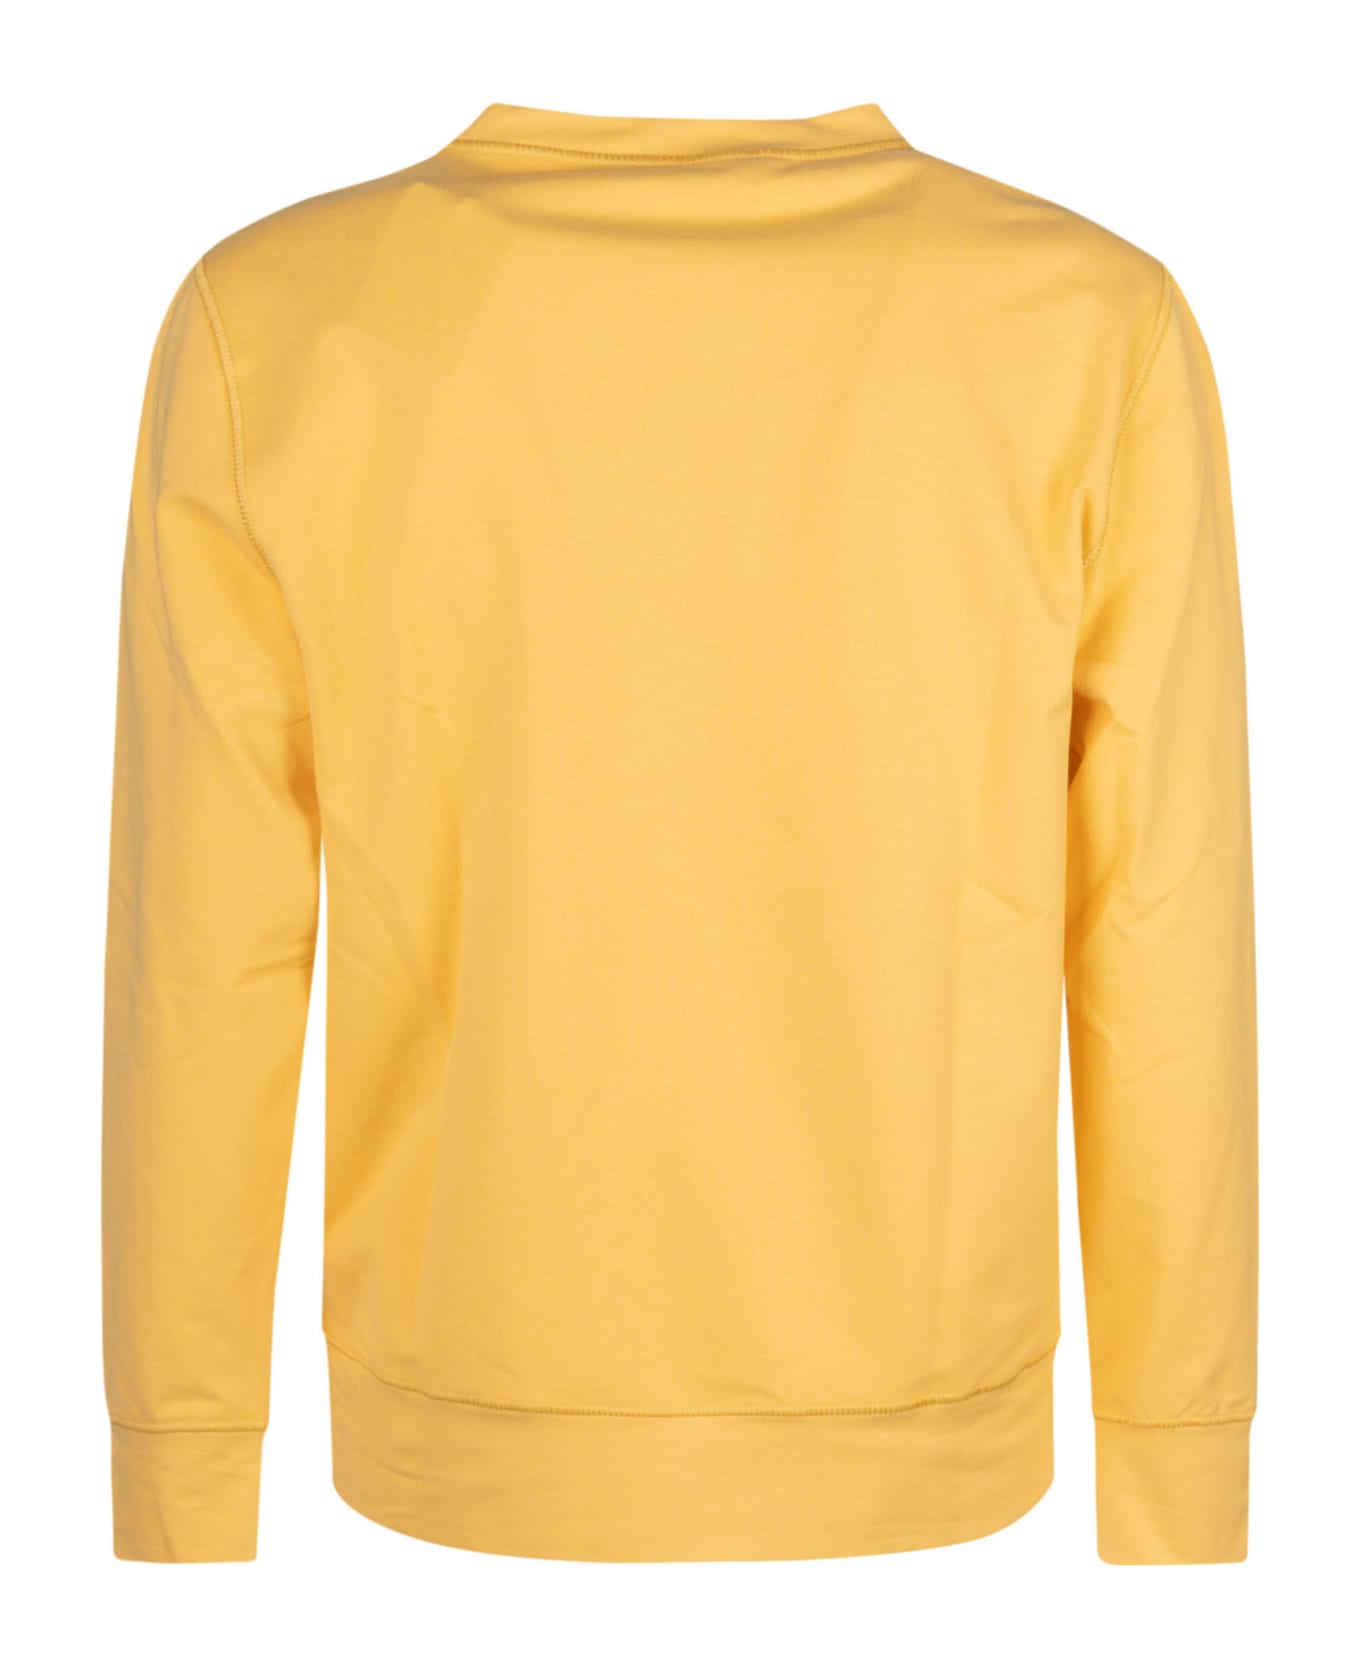 Kiton Logo Sweatshirt - Giallo フリース